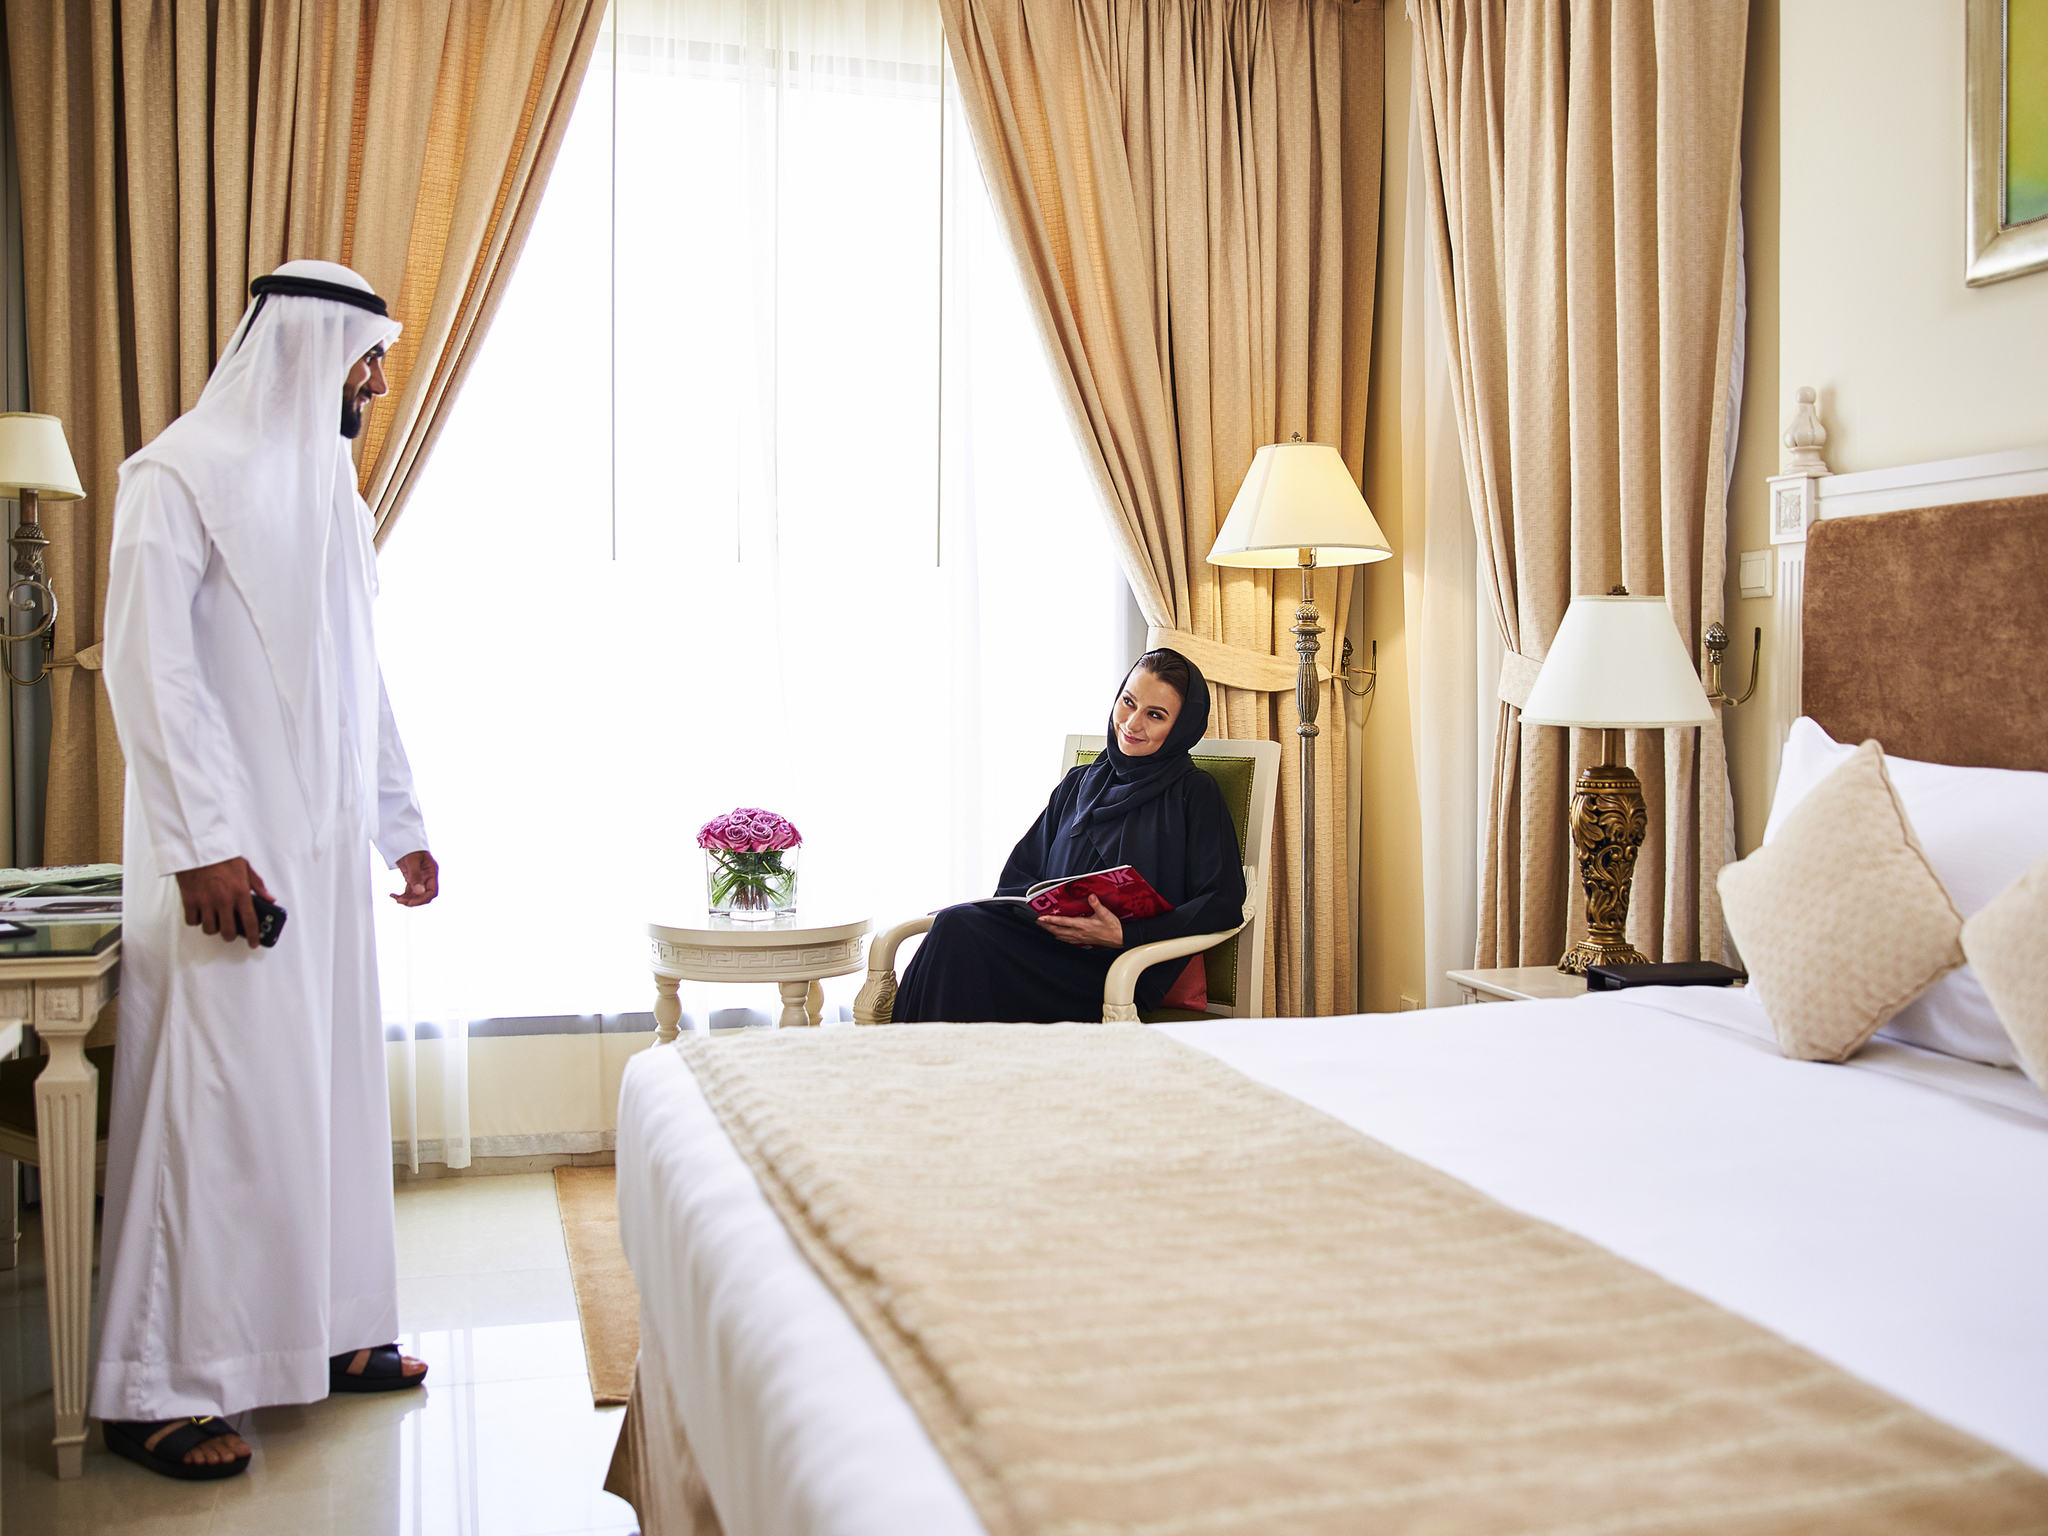 Al barsha heights. Mercure Hotel Suites Apartments Дубай. ОАЭ,Дубай,Mercure Dubai Barsha heights Hotel Suites. Mercure Hotel Suites Apartments Barsha heights 4. Mercure Hotel Apartments Dubai Barsha heights.